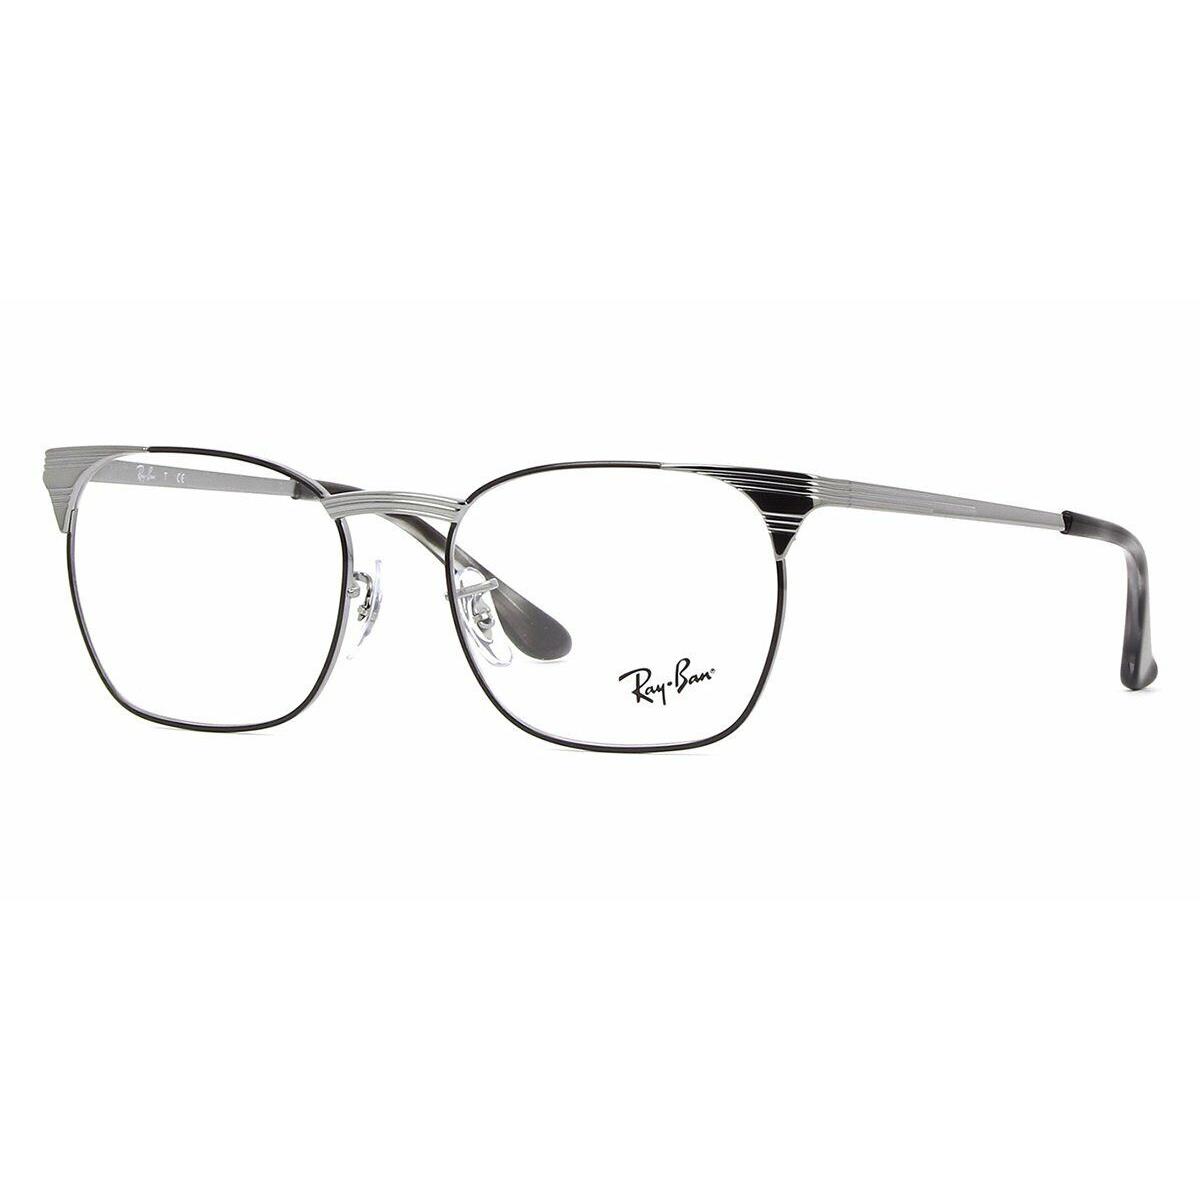 Ray-ban Frames Black Silver Metal Men s Eyeglasses RB6386 2901 53 18 140